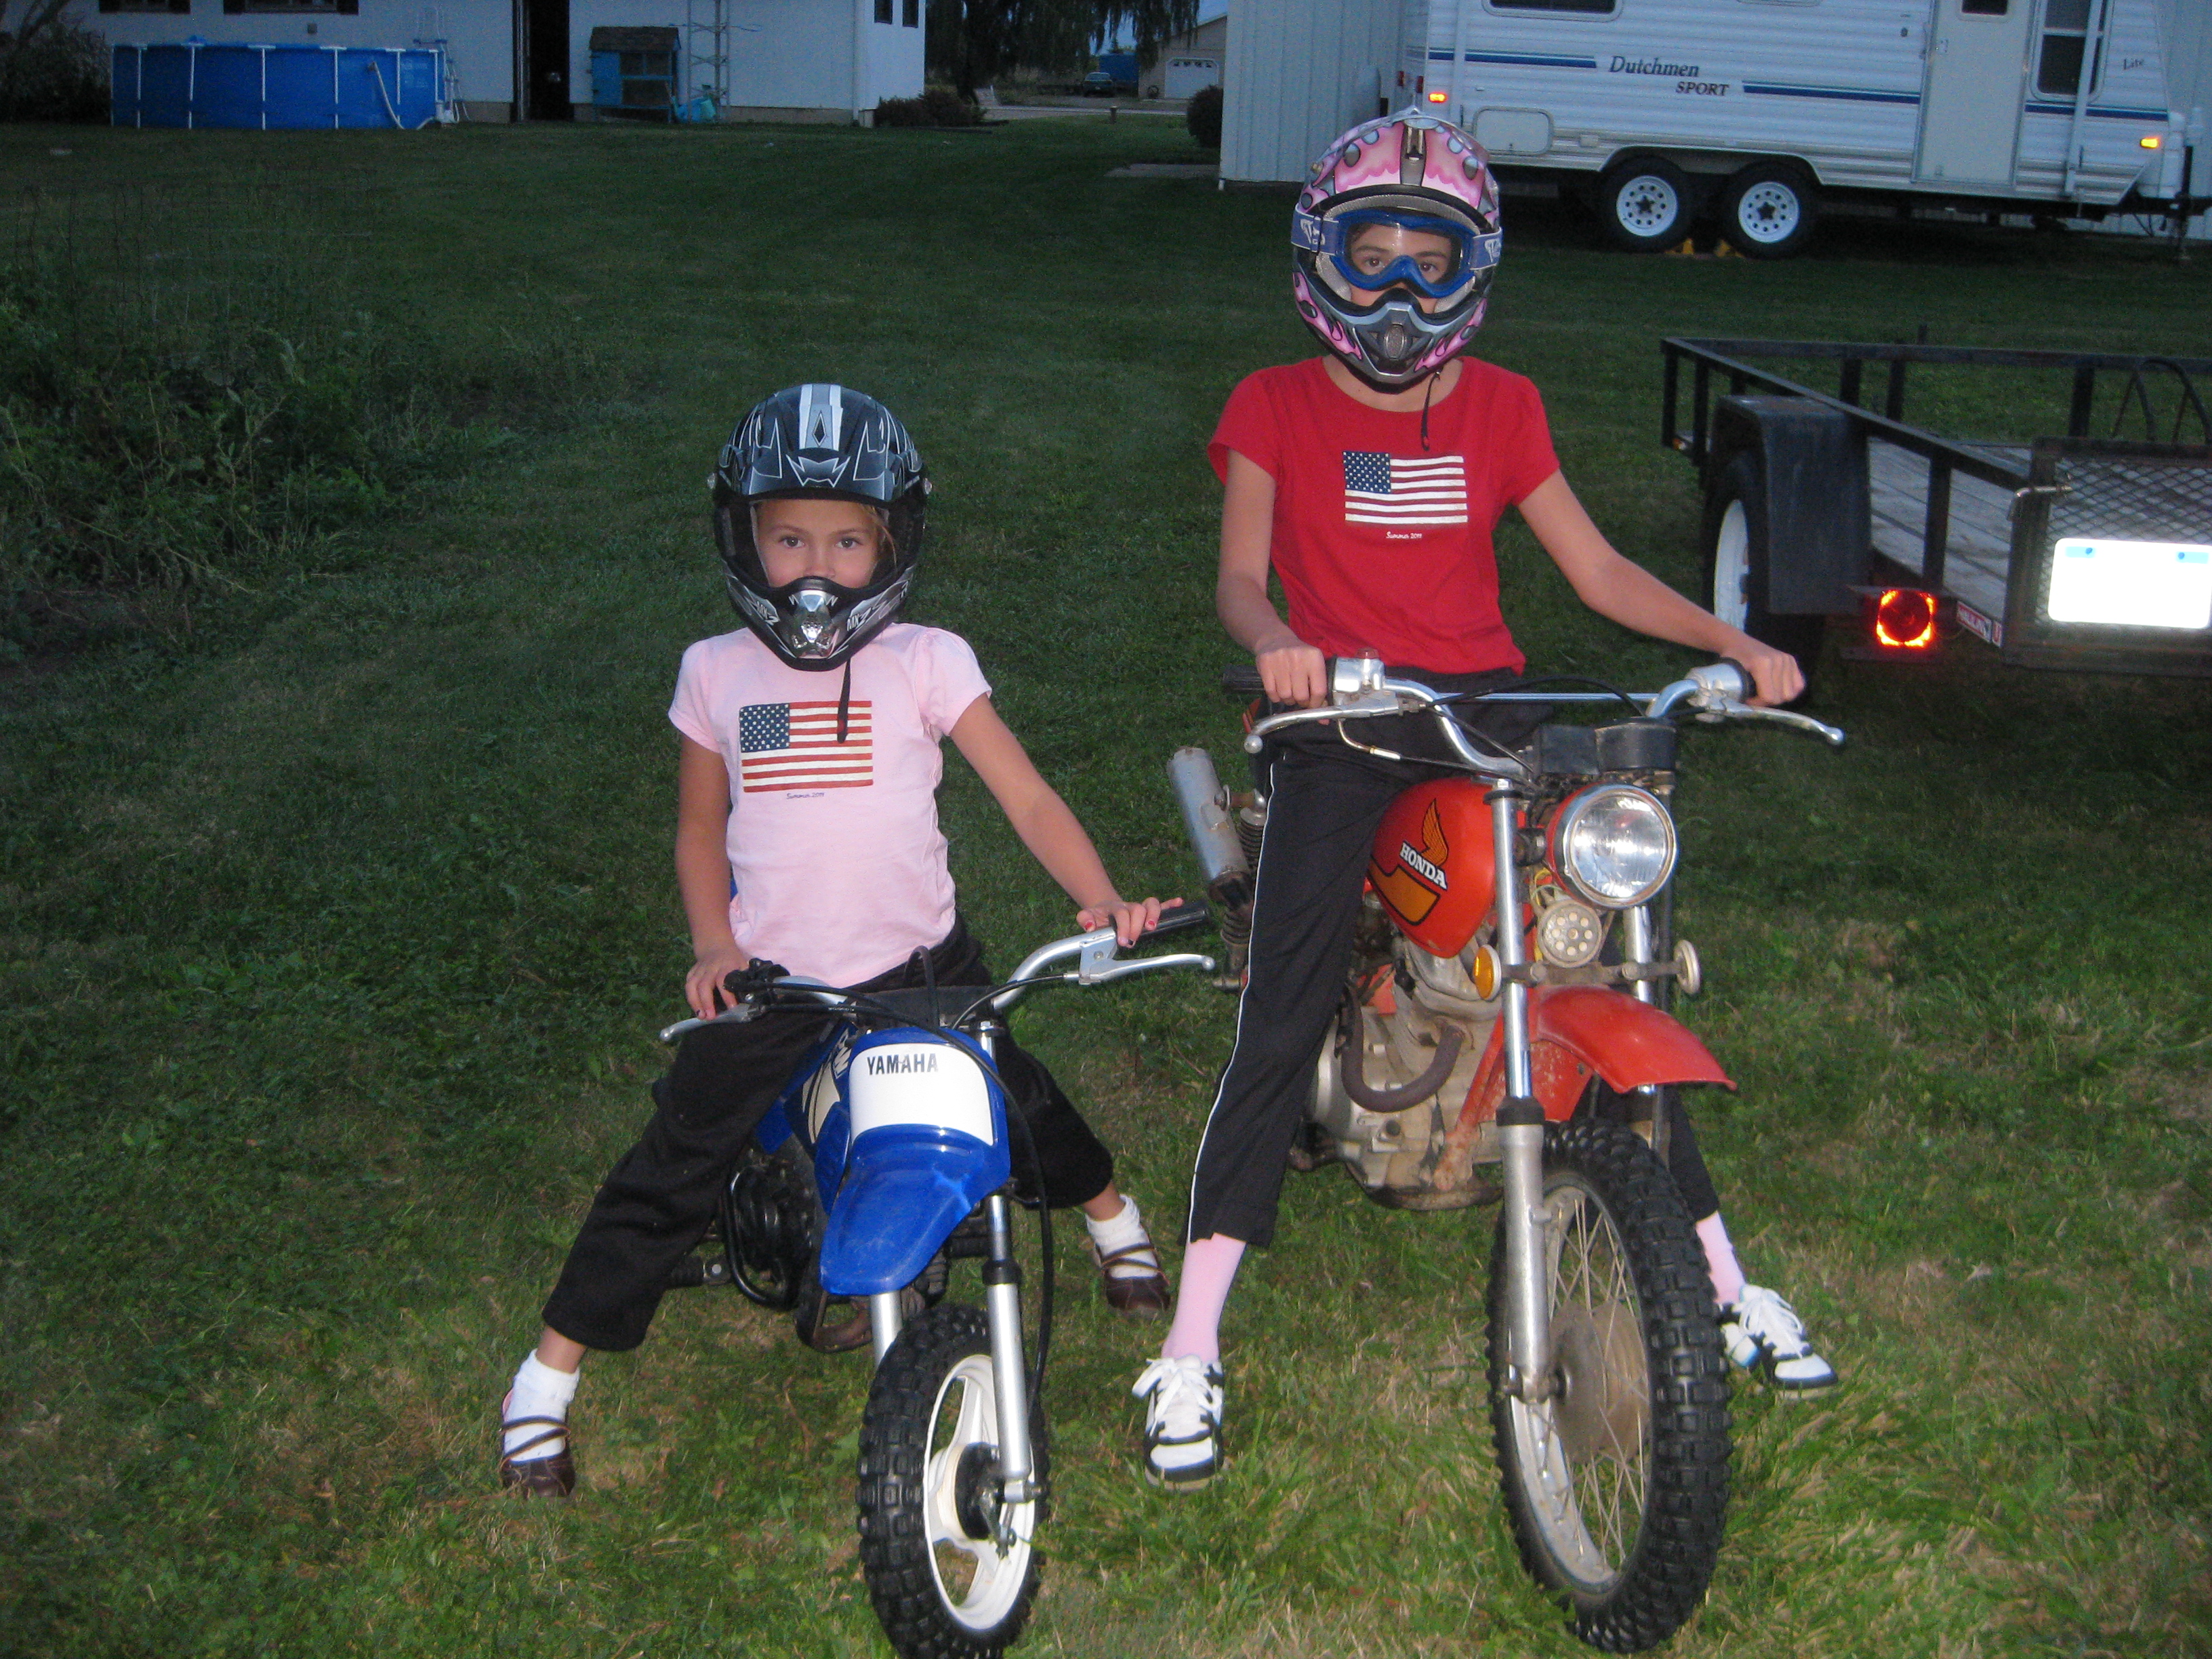 Both my girls riding dirt bikes in the back yard. 2012